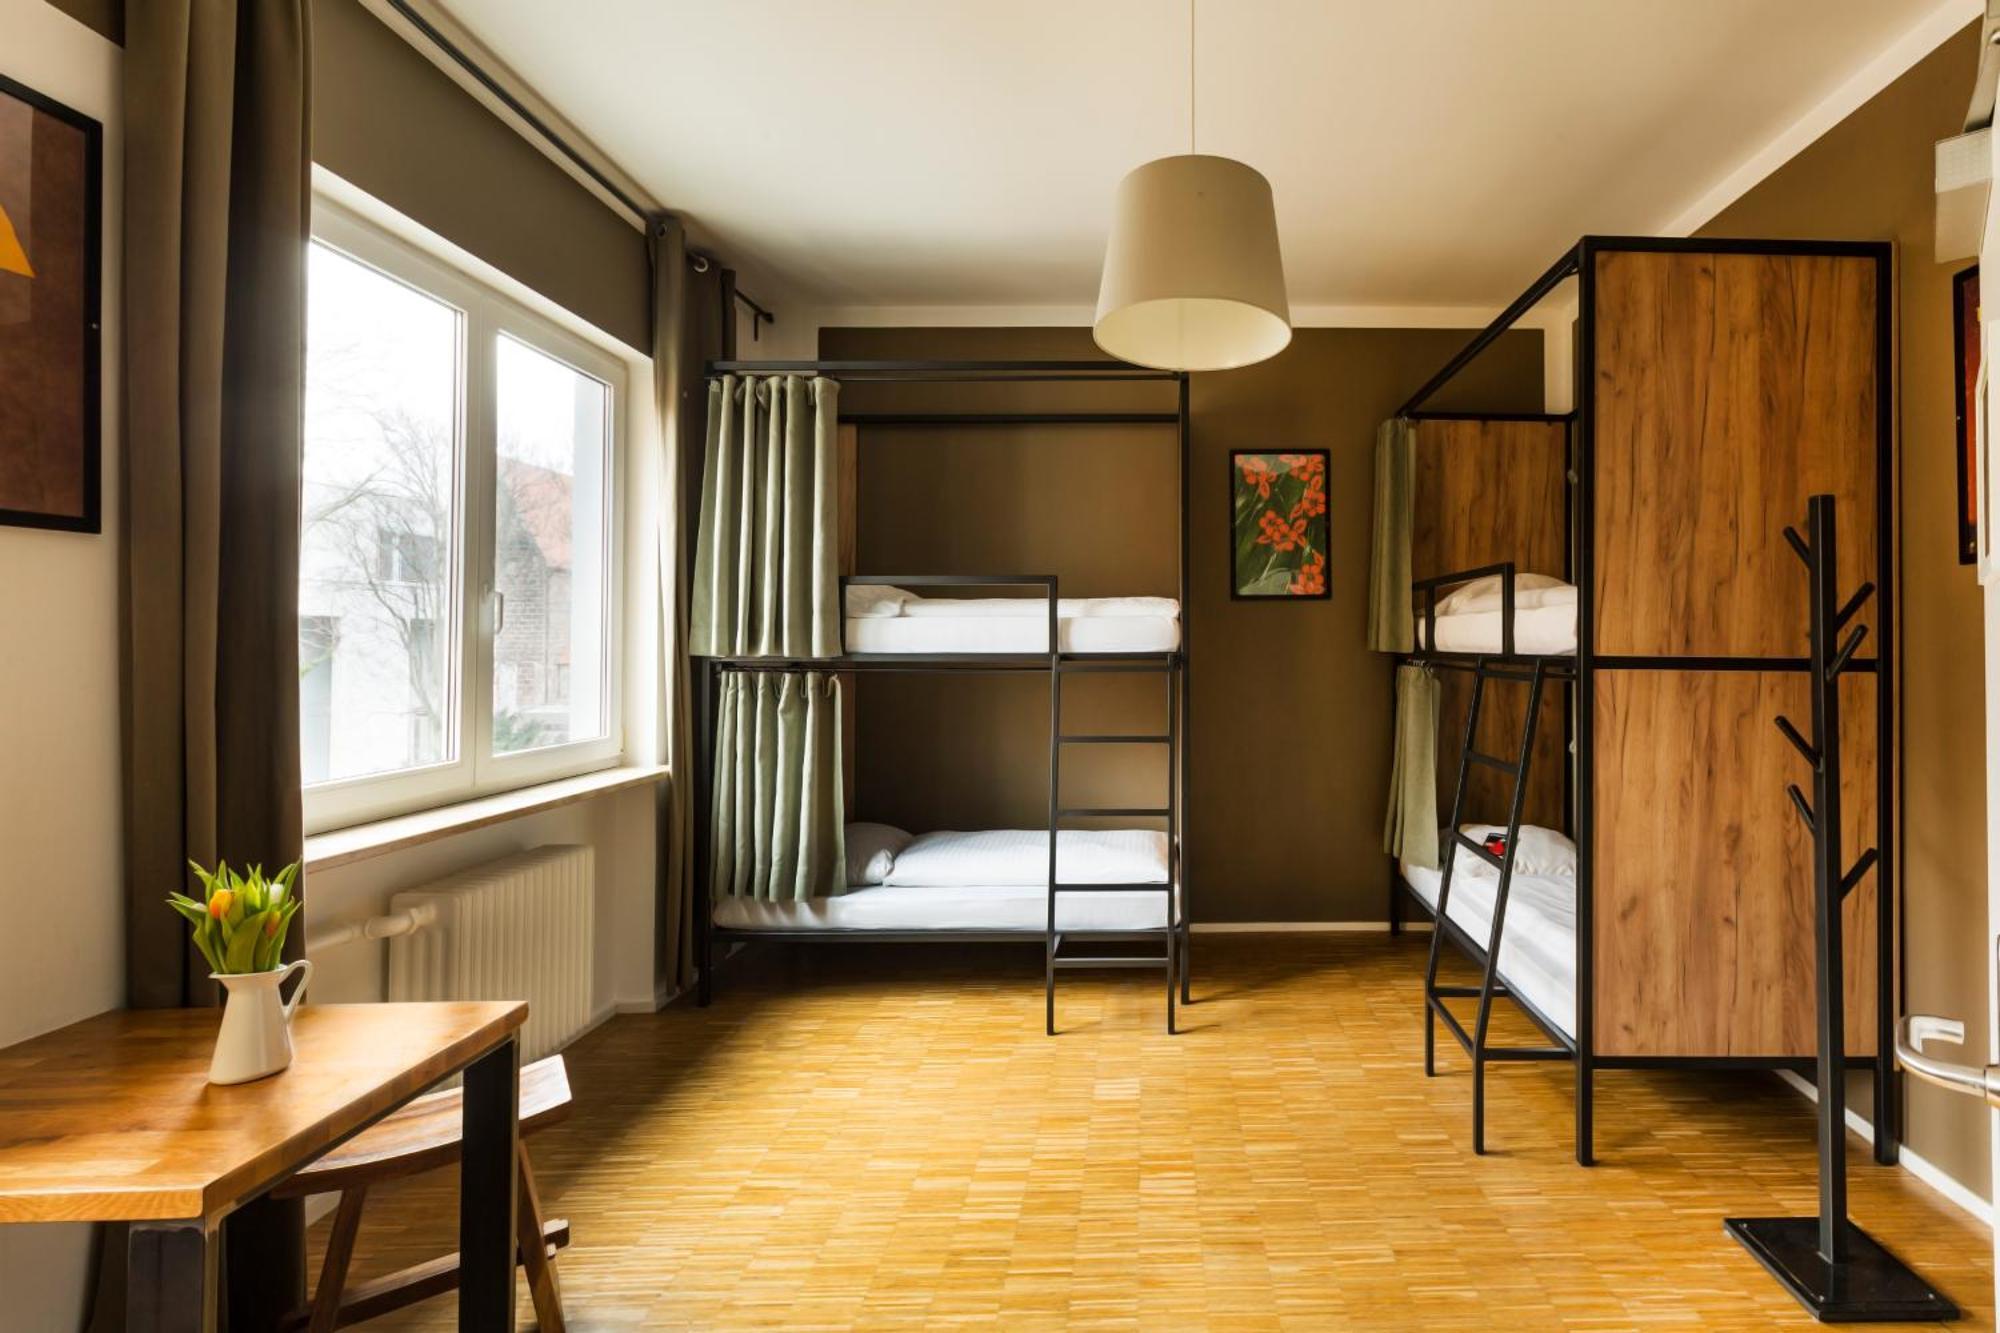 Five Reasons Hostel & Hotel Nuremberg Exterior photo